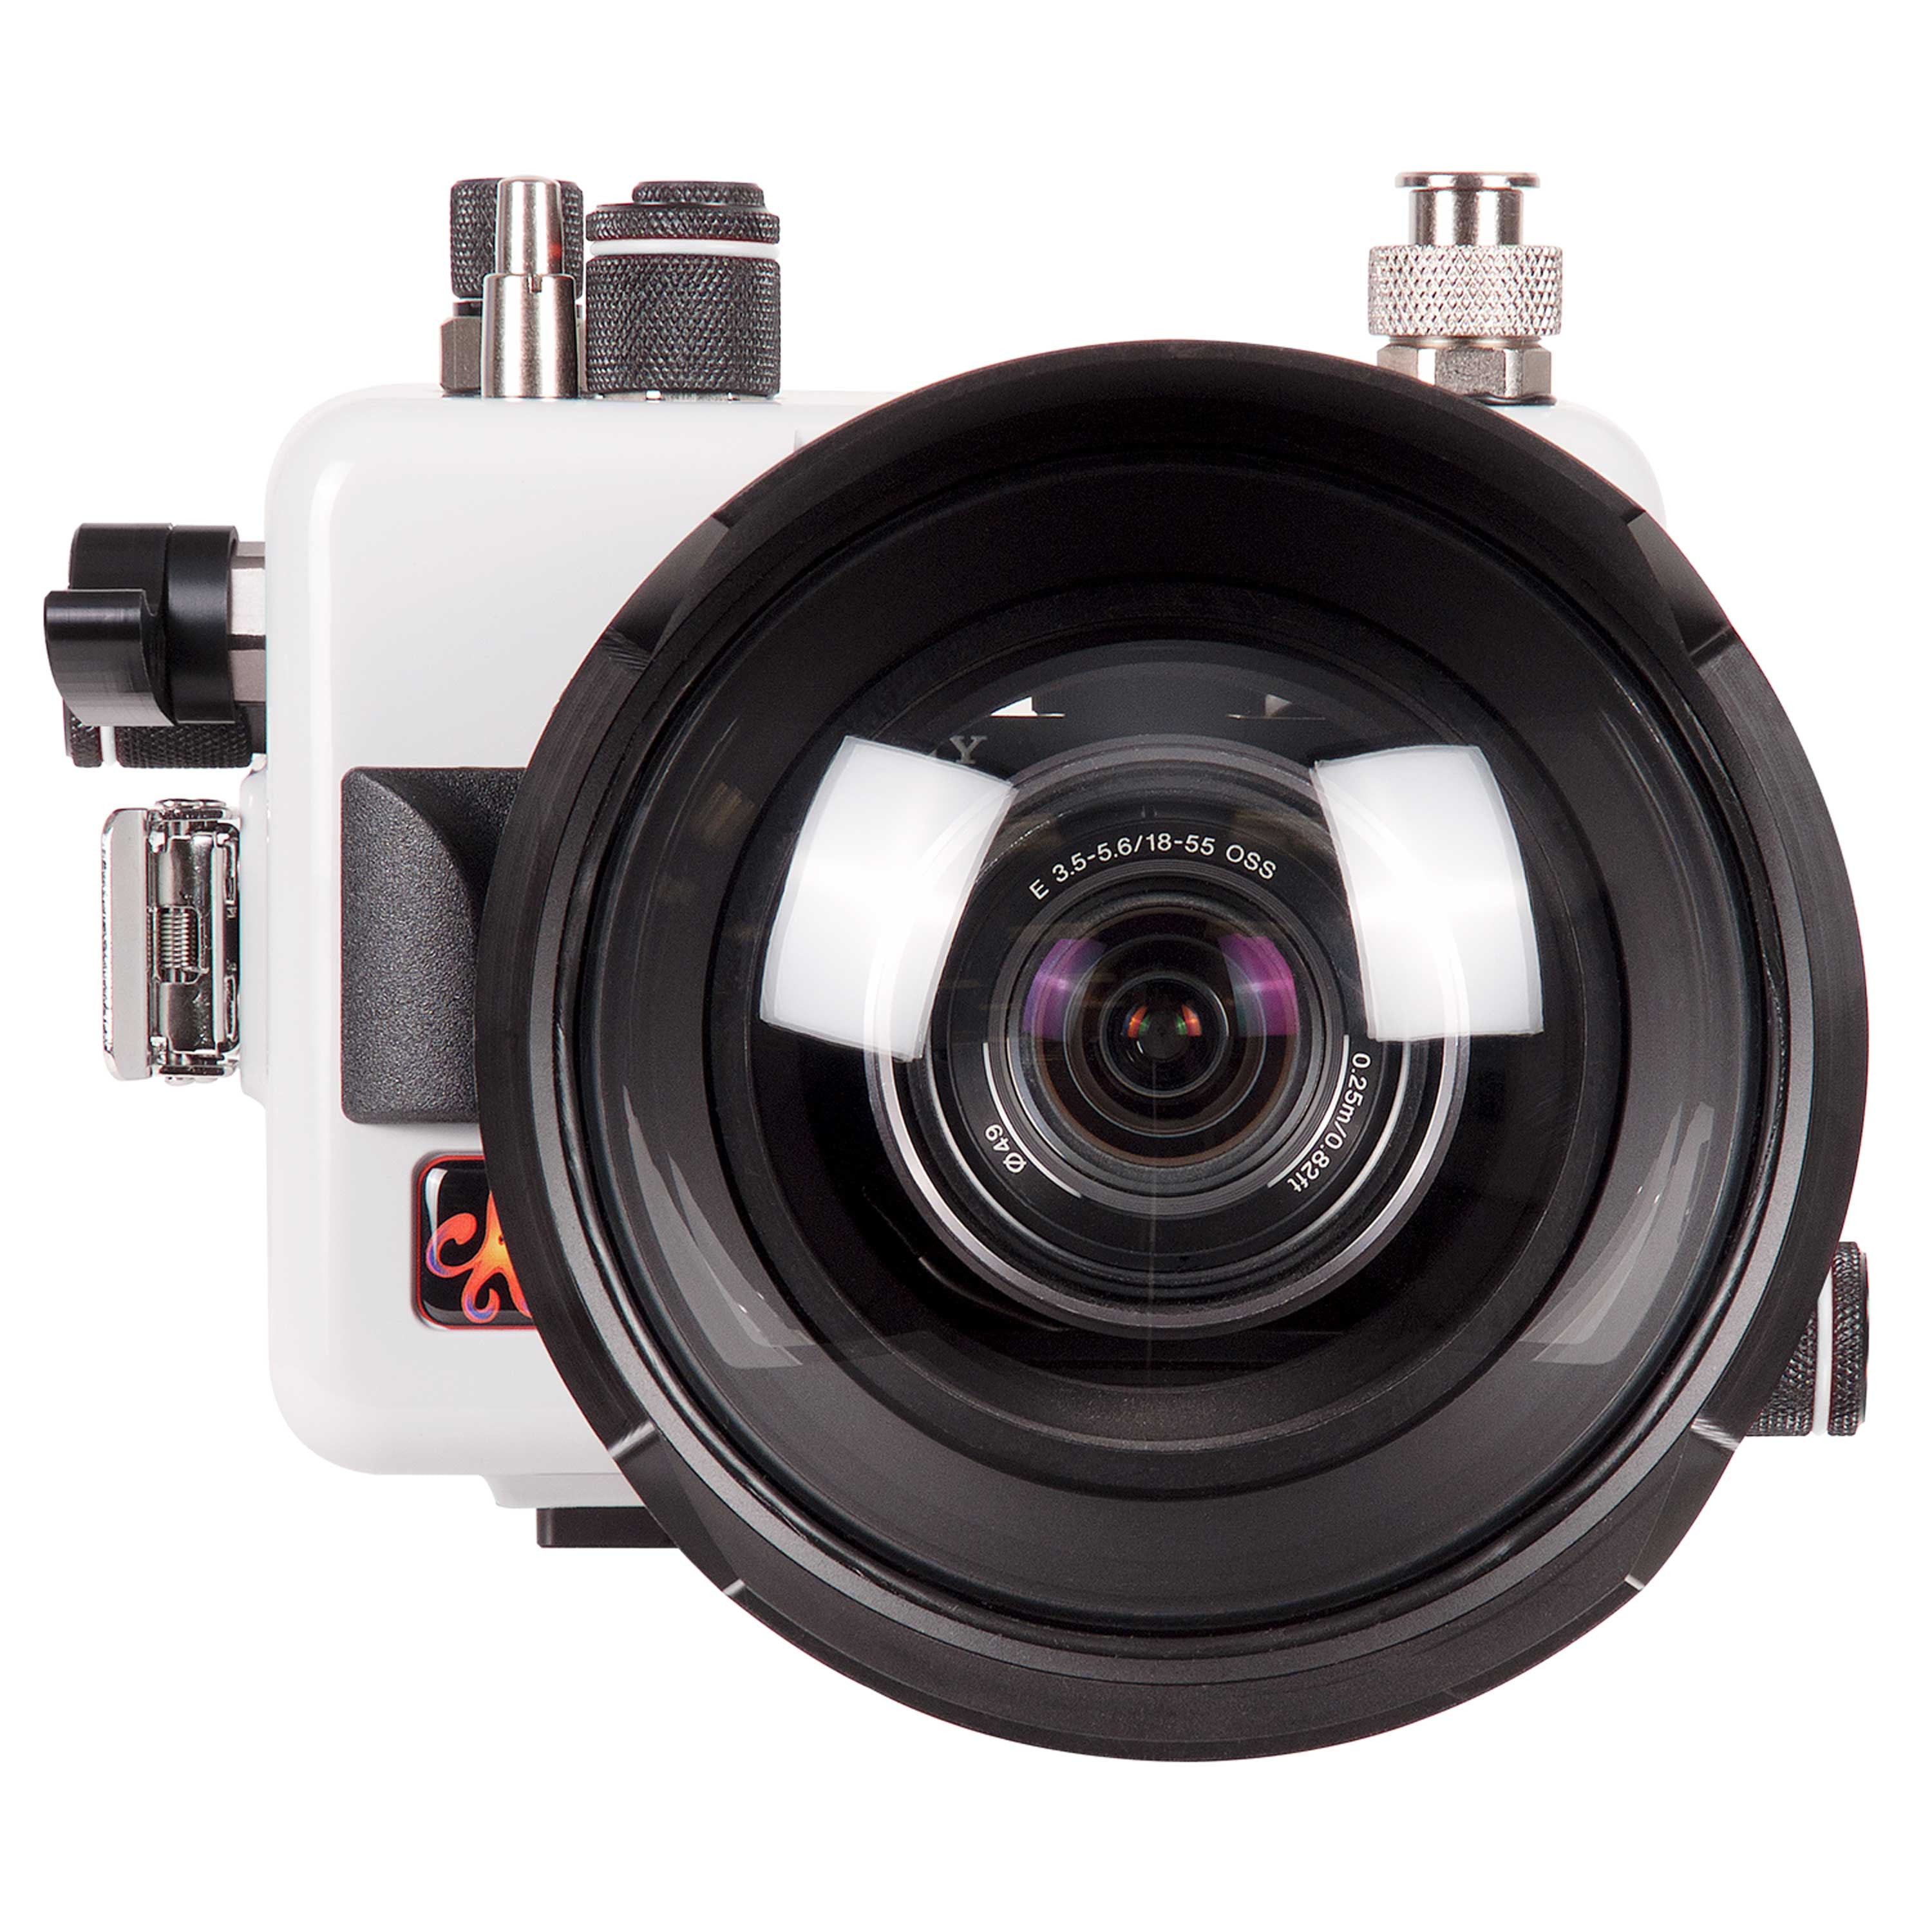 200DLM/A Underwater TTL Housing for Sony Alpha A6300 Mirrorless Camera